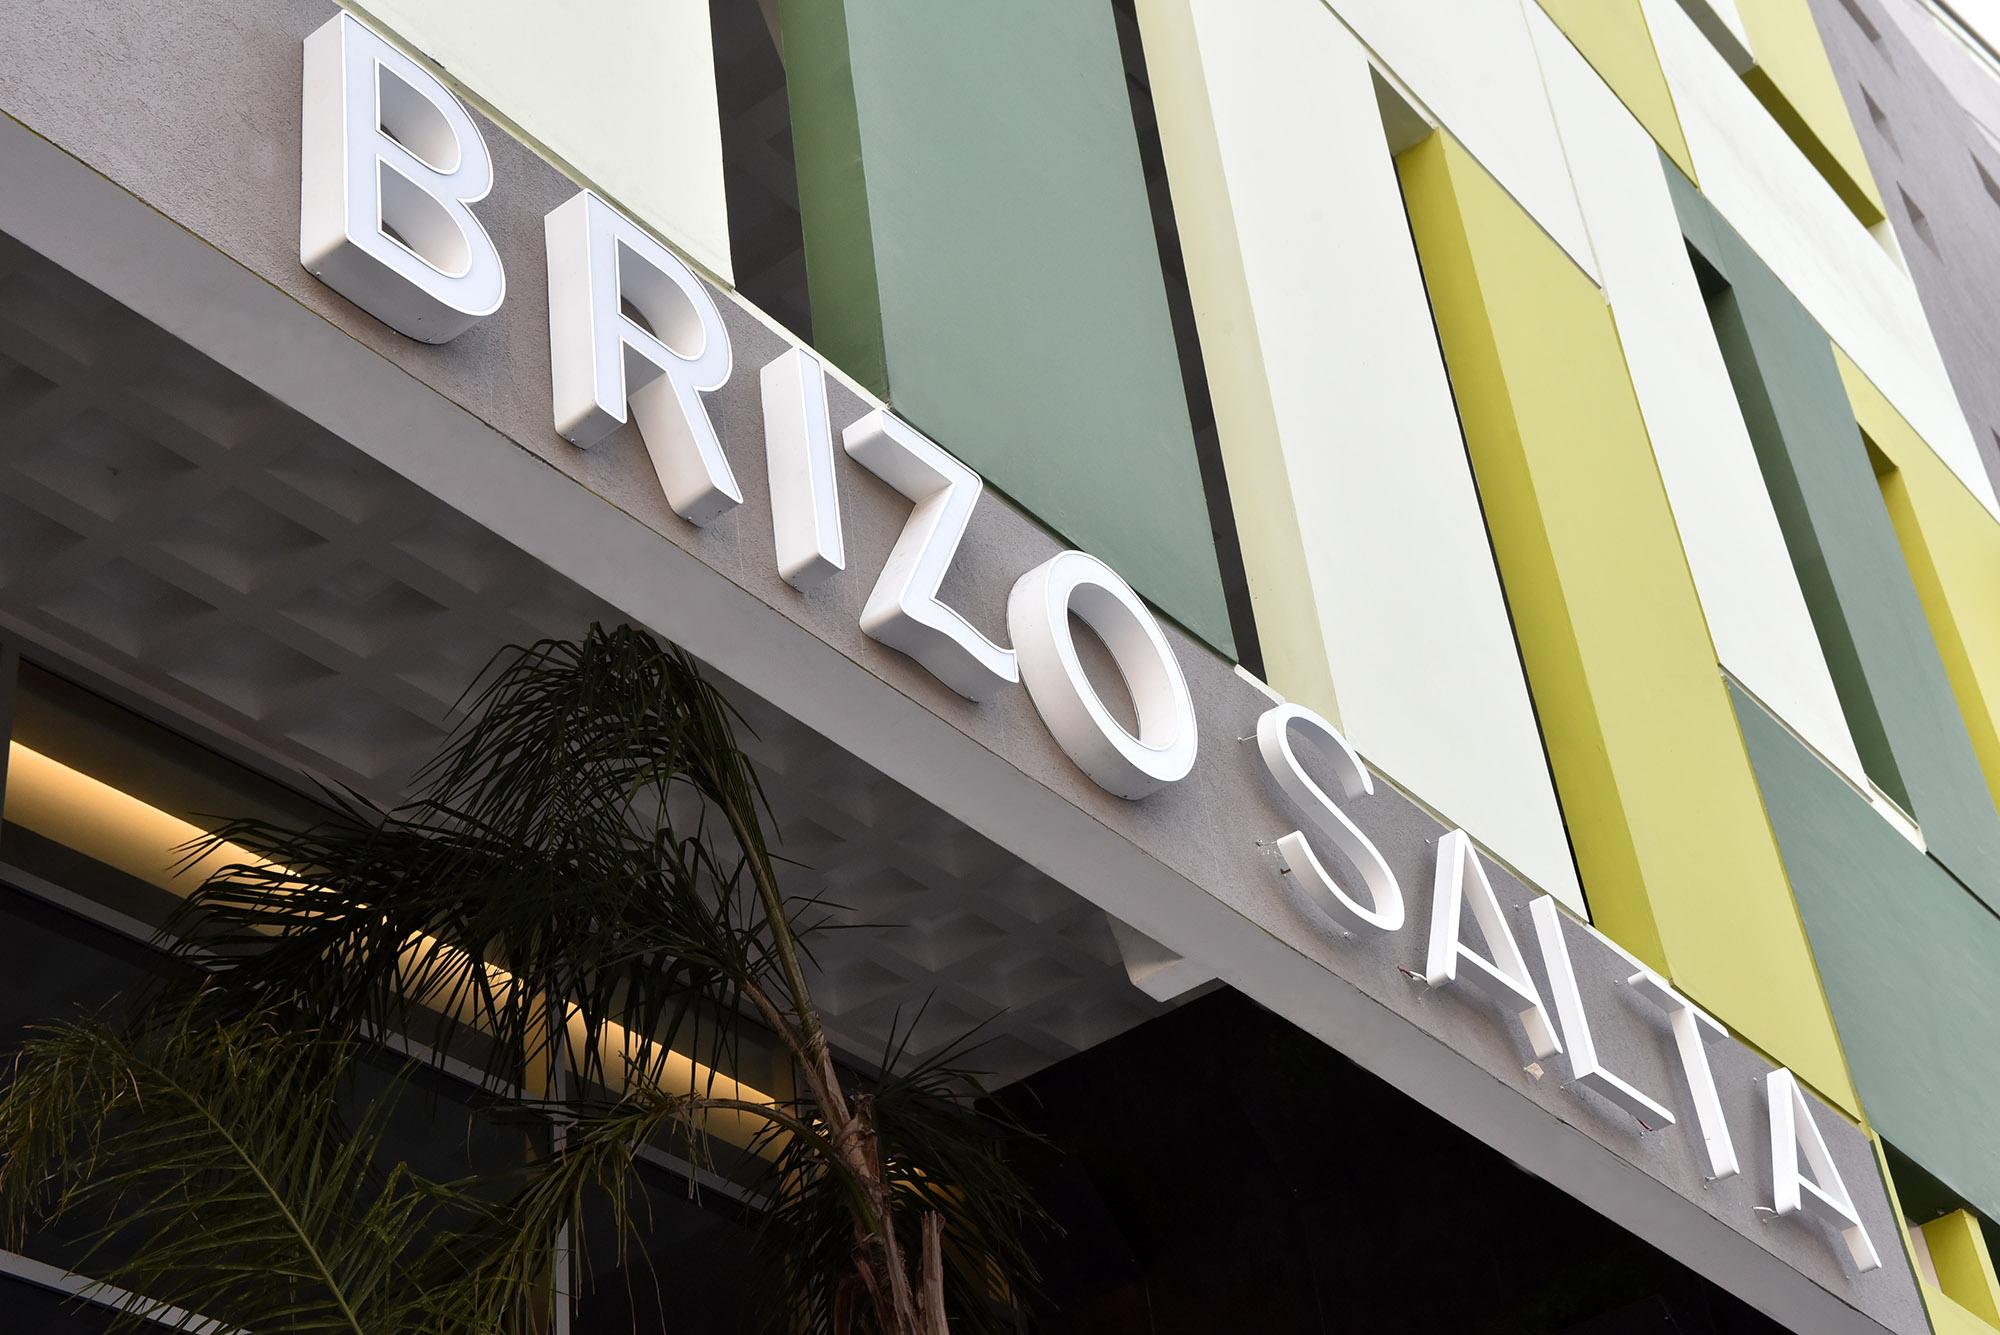 Brizo Salta Hotell Exteriör bild